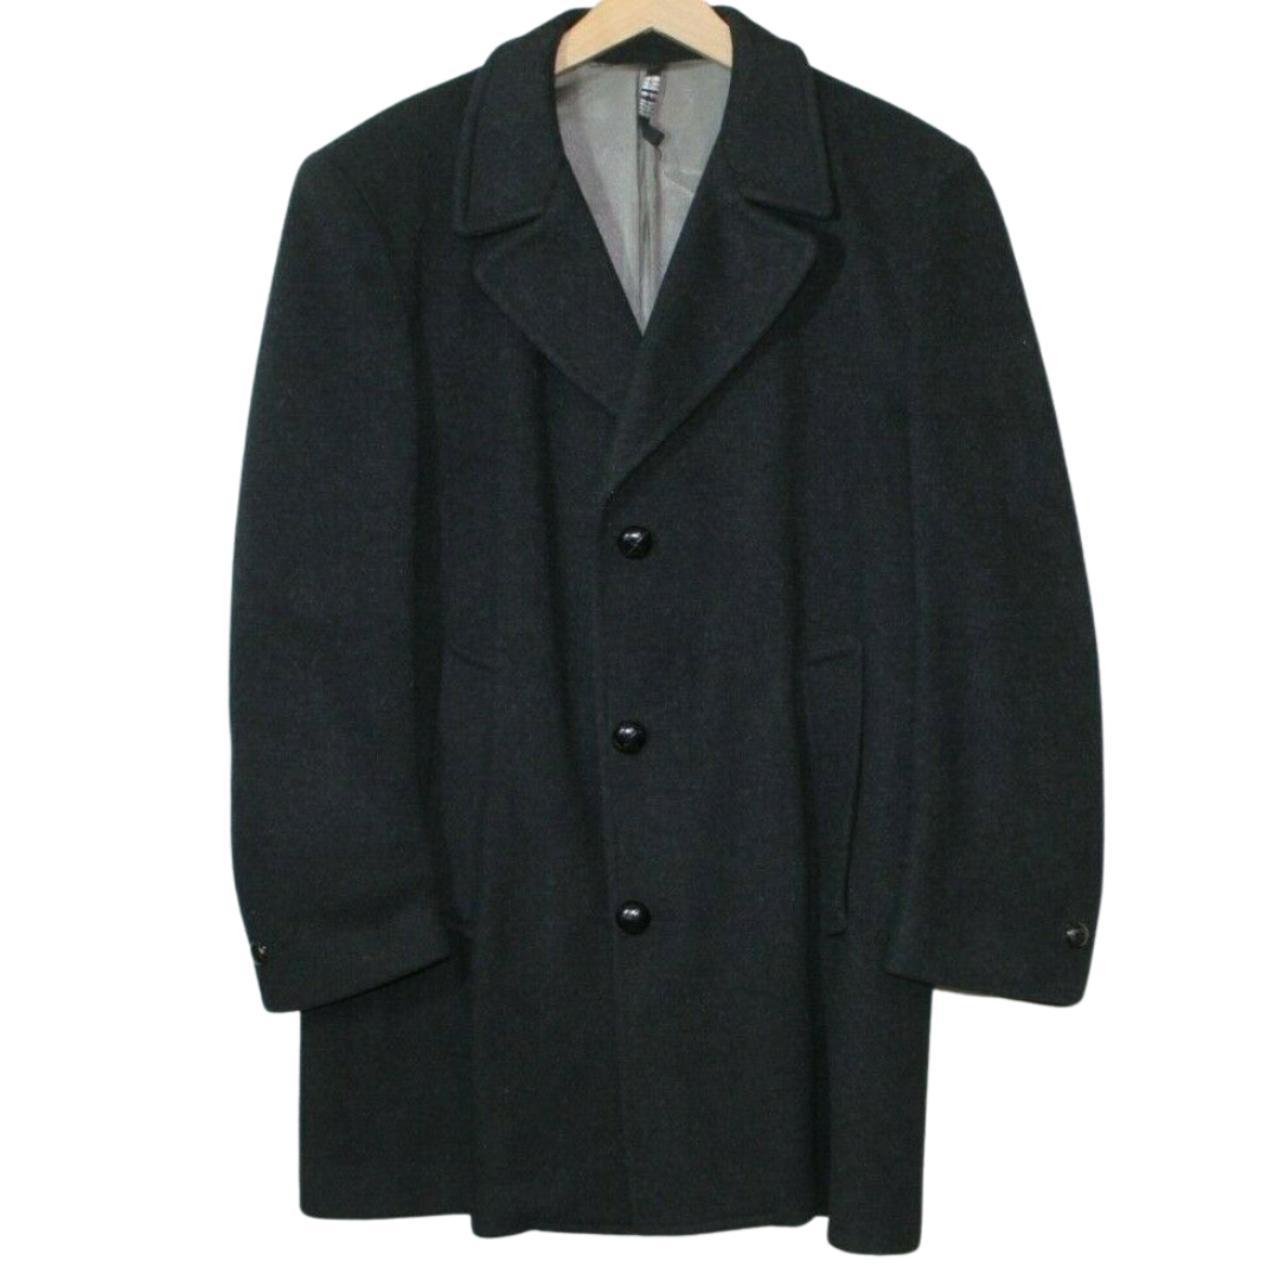 Product Image 1 - Vintage Stafford mens jacket size